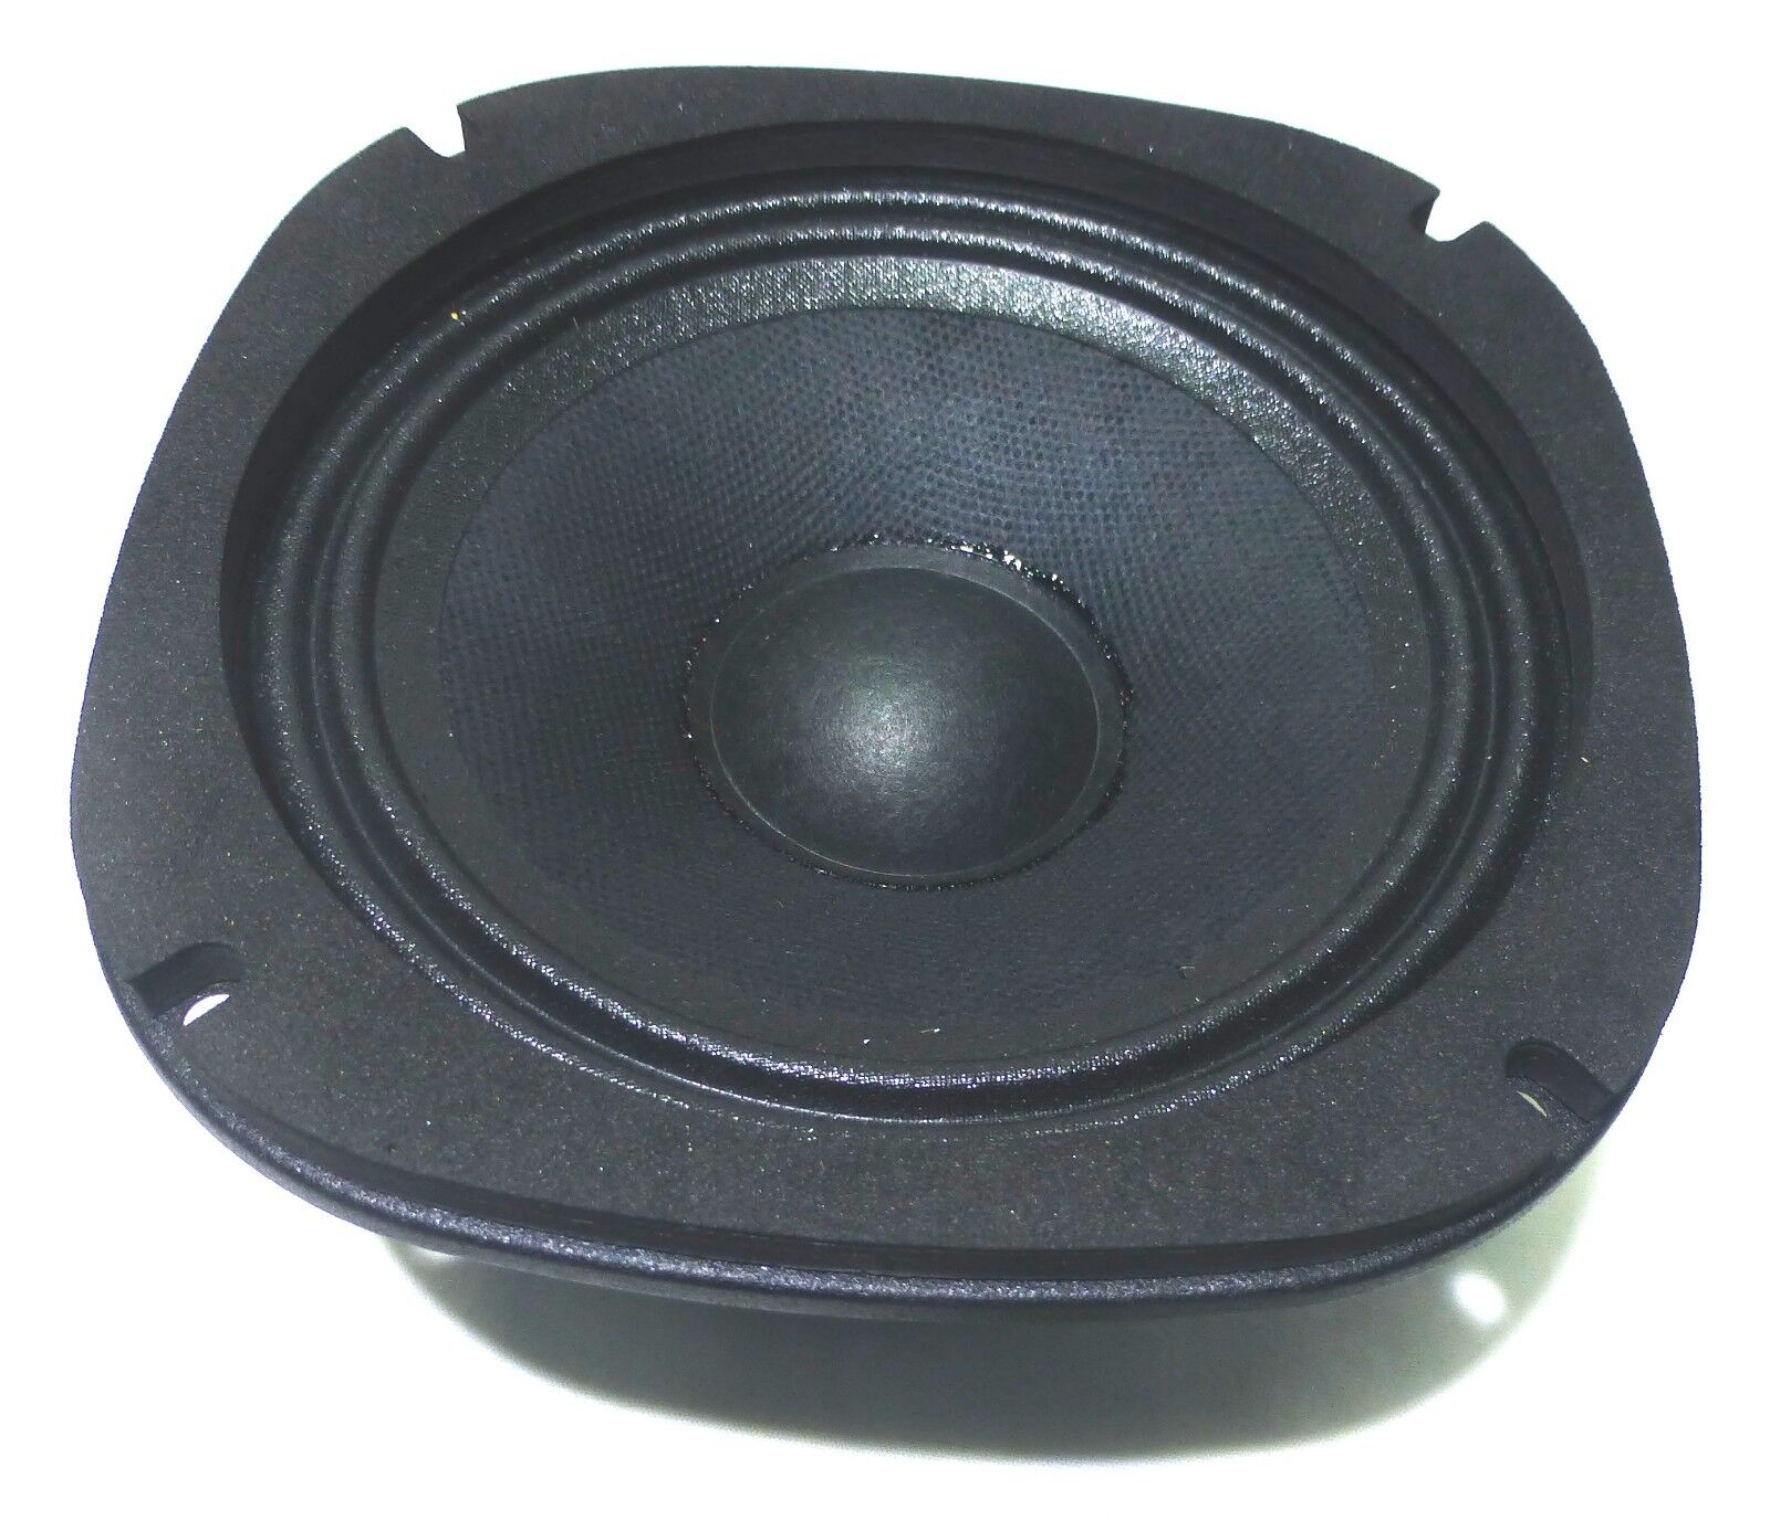 Celestion 5" Replacement Speaker for Yorkville 7405 / U15 Speakers 8Ω